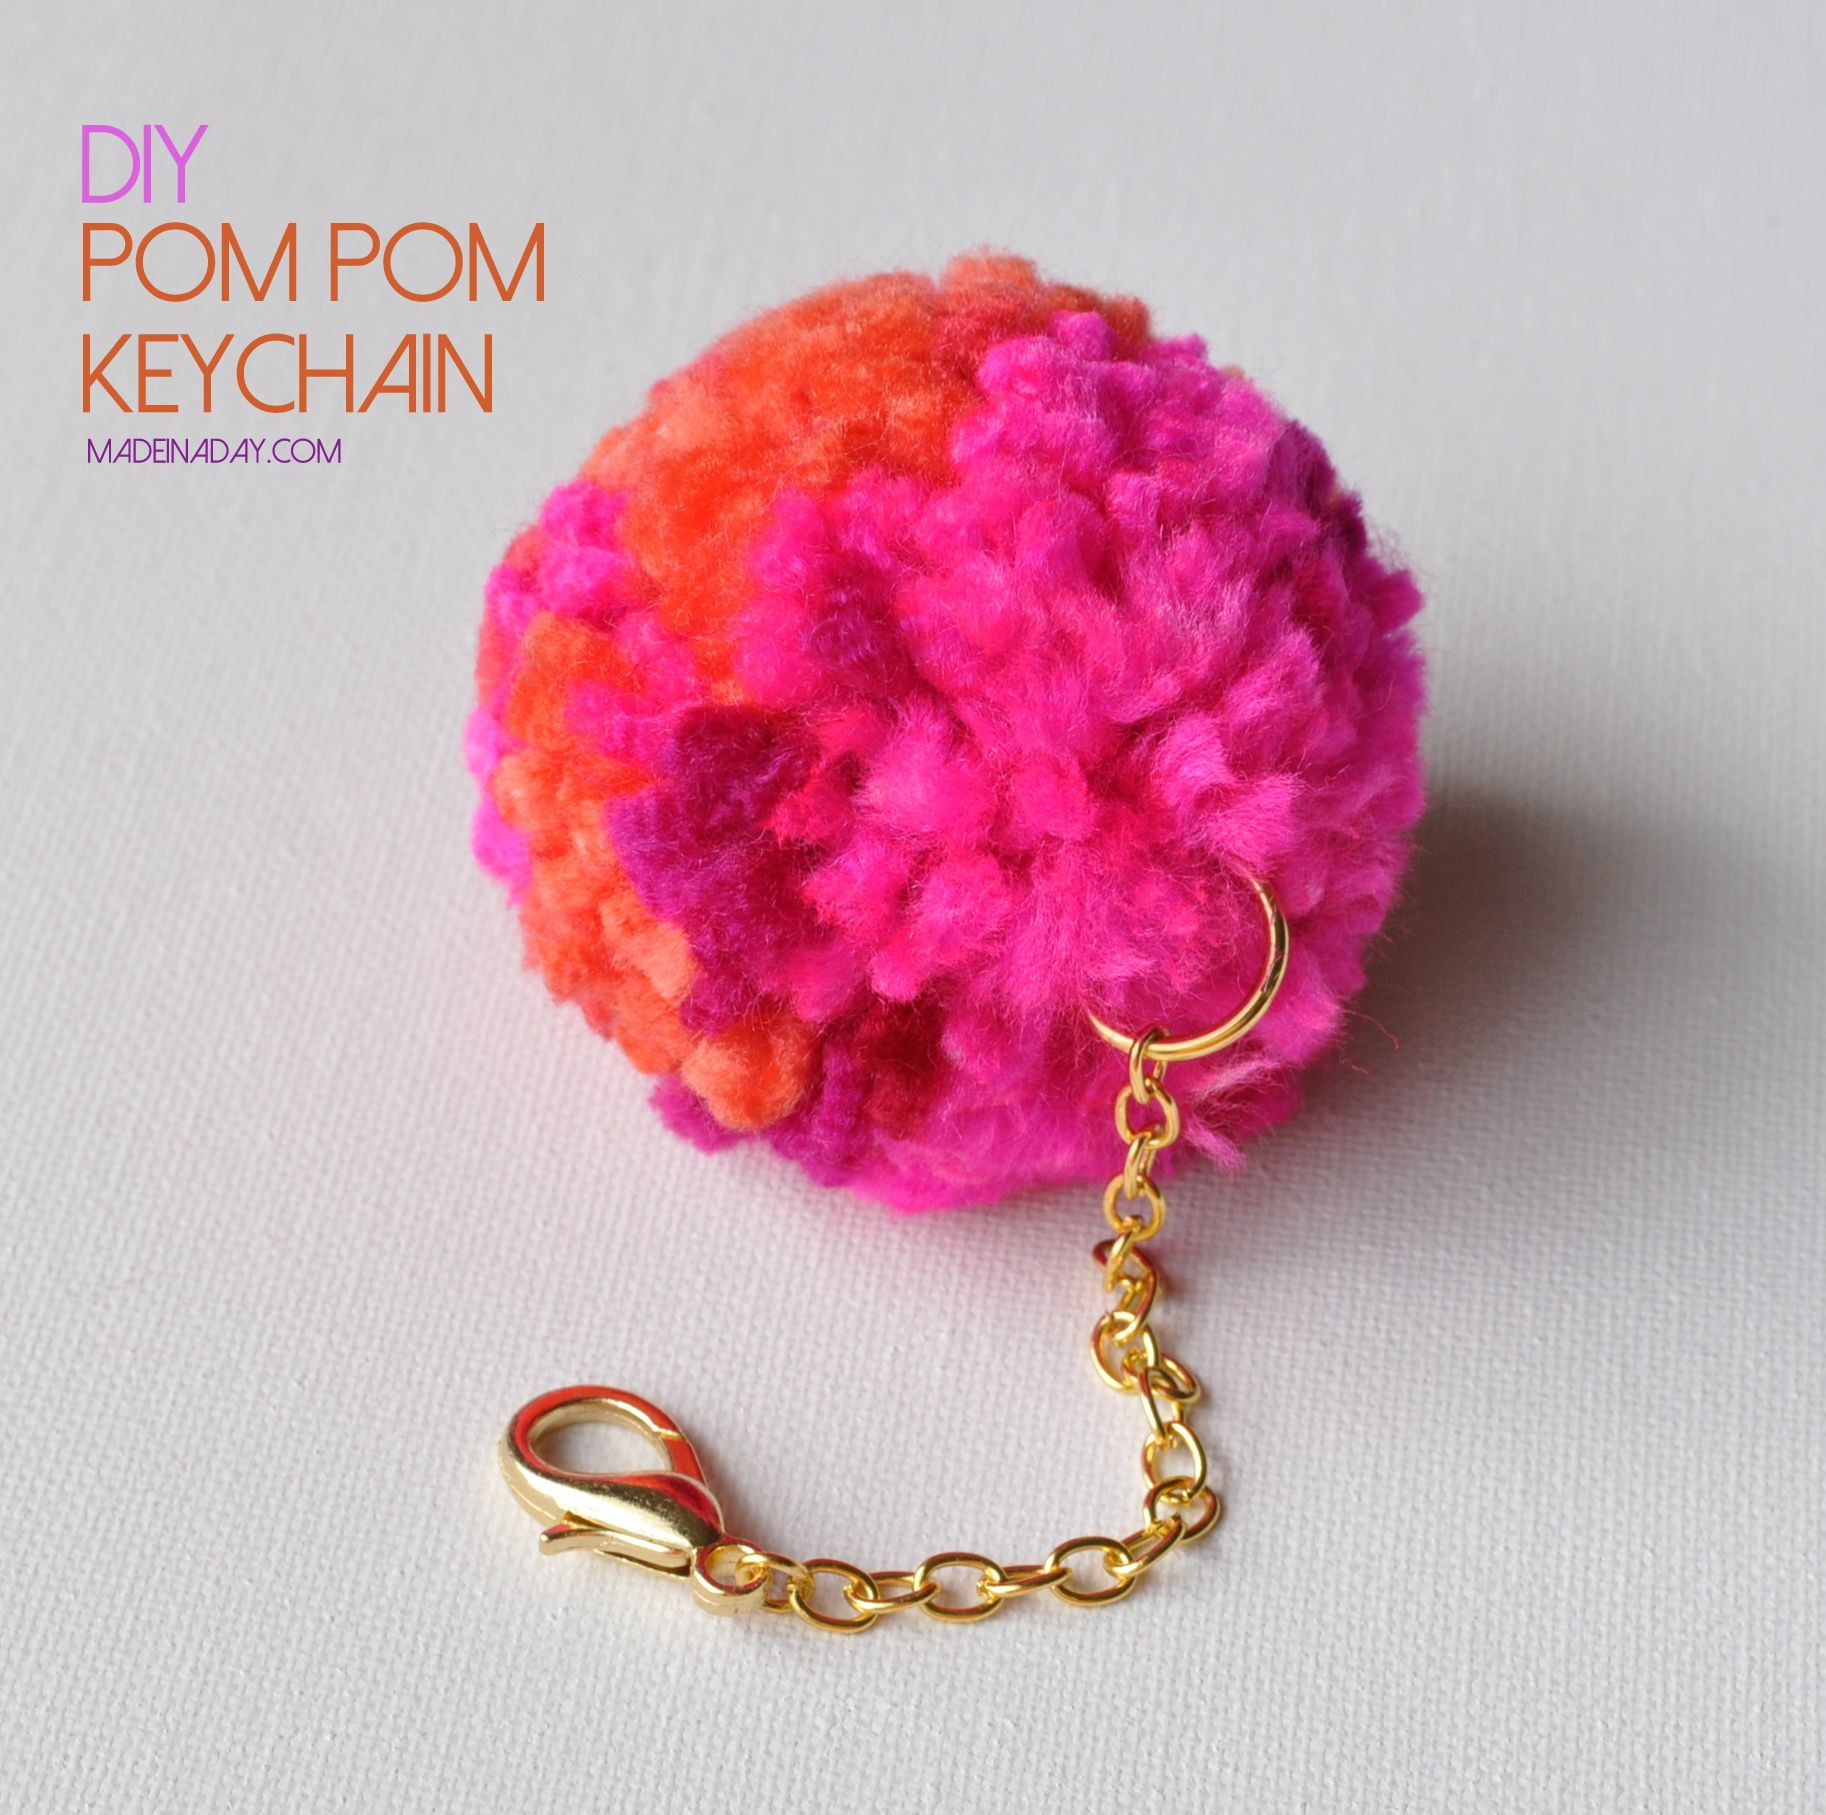 Best ideas about DIY Pom Pom Maker
. Save or Pin DIY Pom Pom Keychain Bag Charm BLOG ALL POSTS Now.